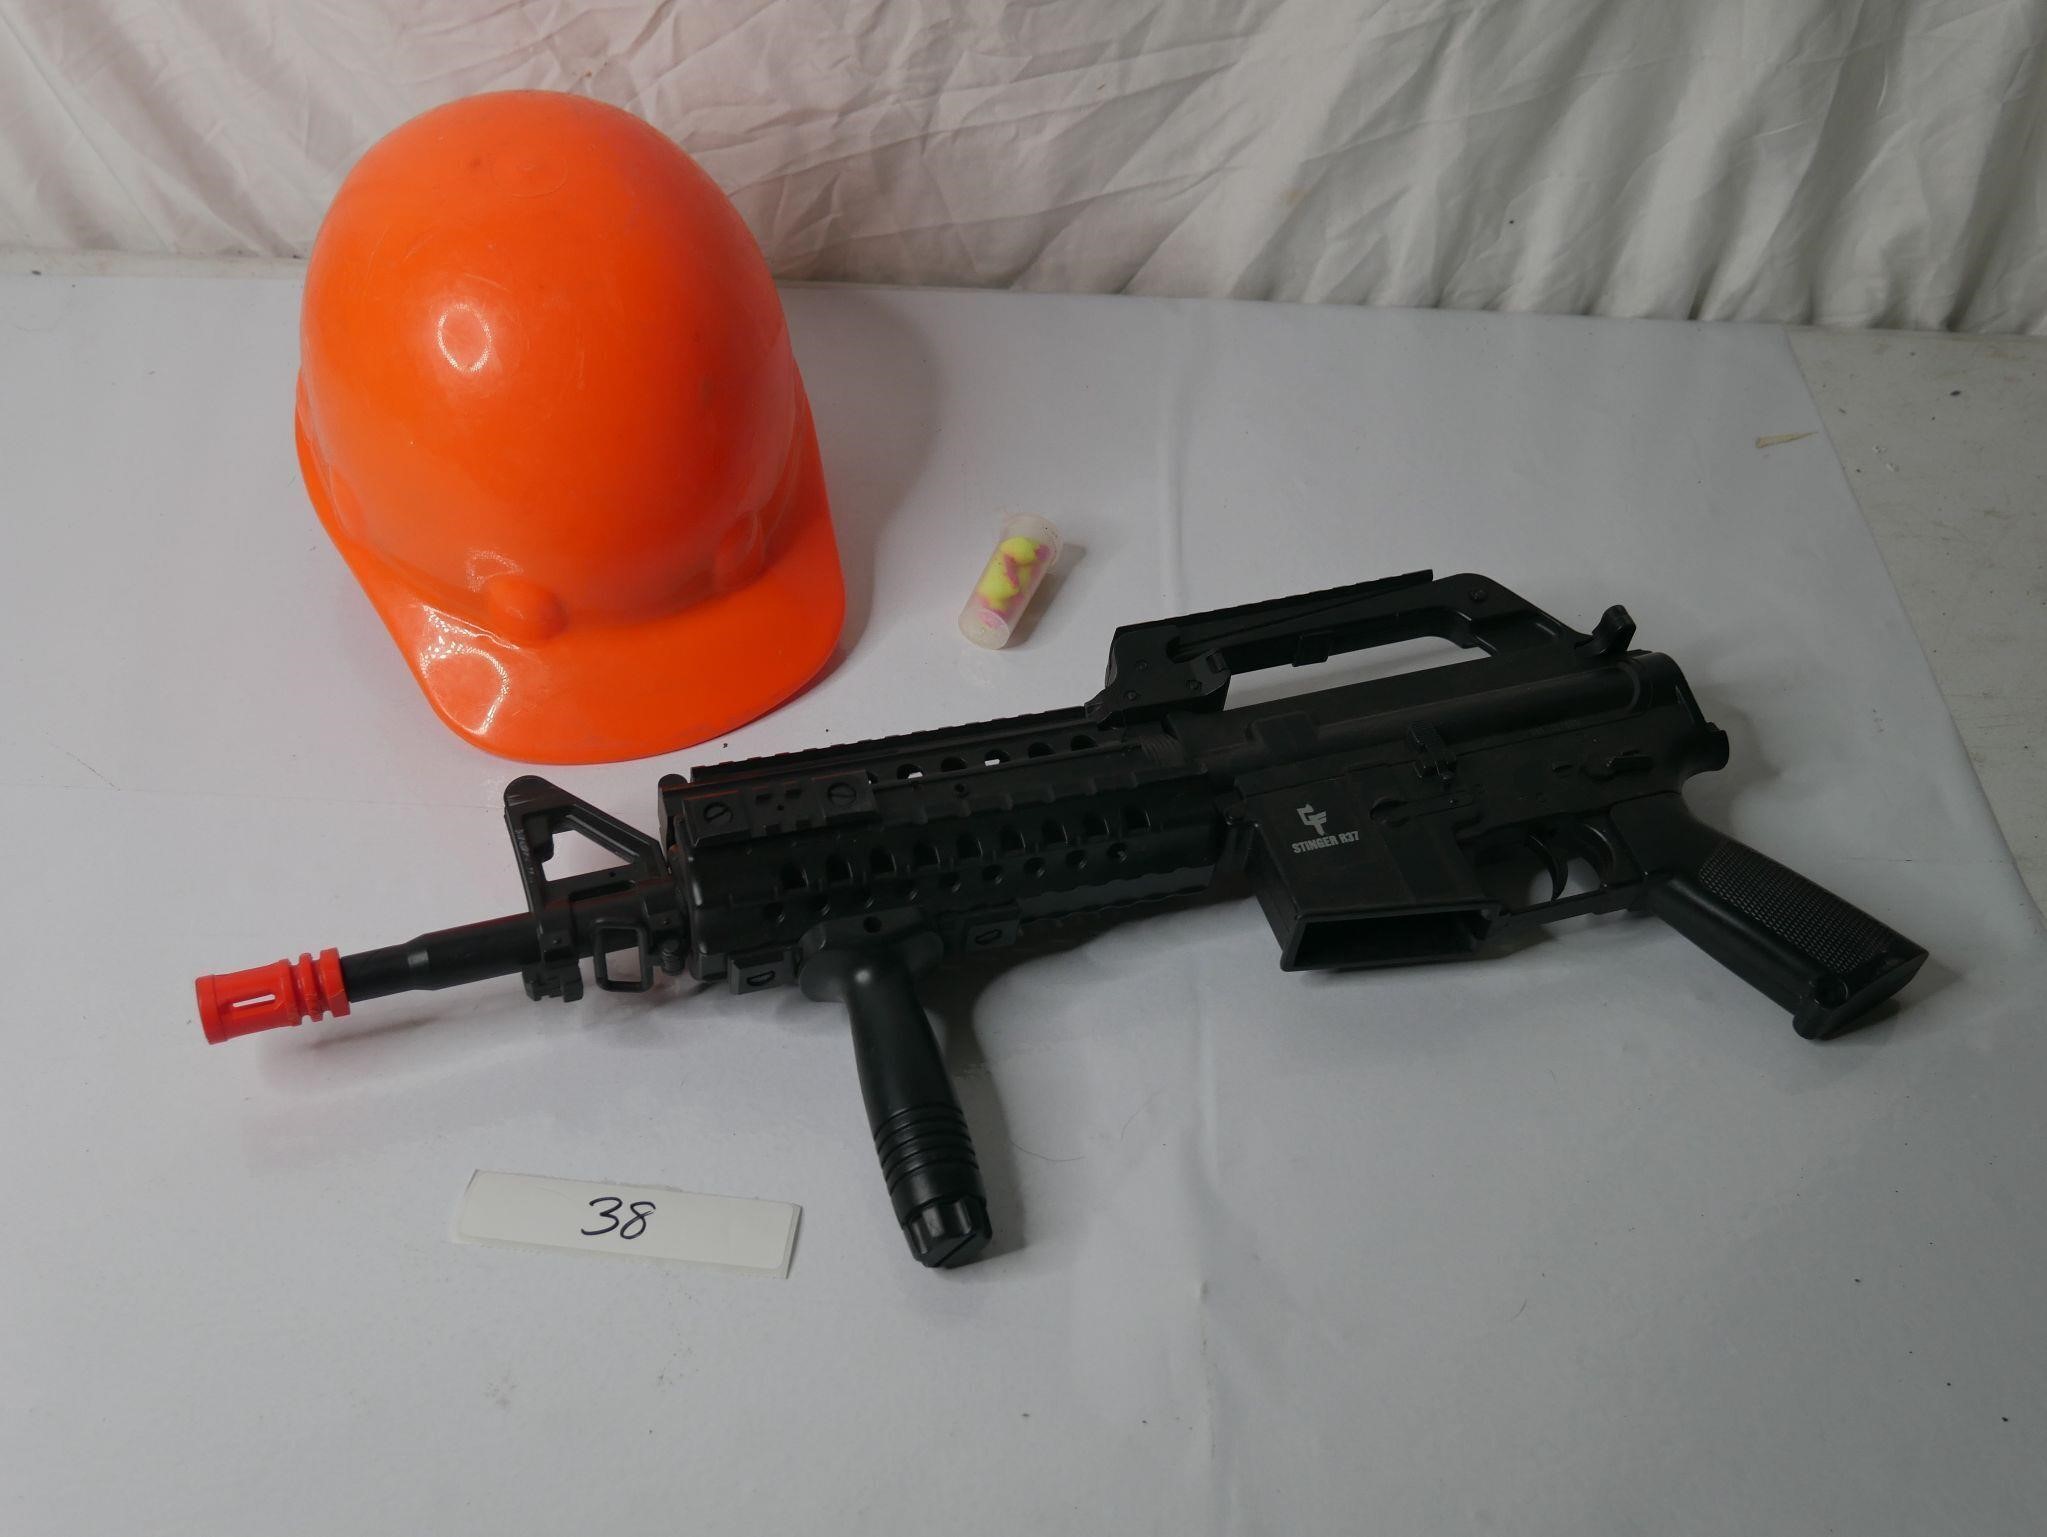 airsoft gun? helmet and ear plugs